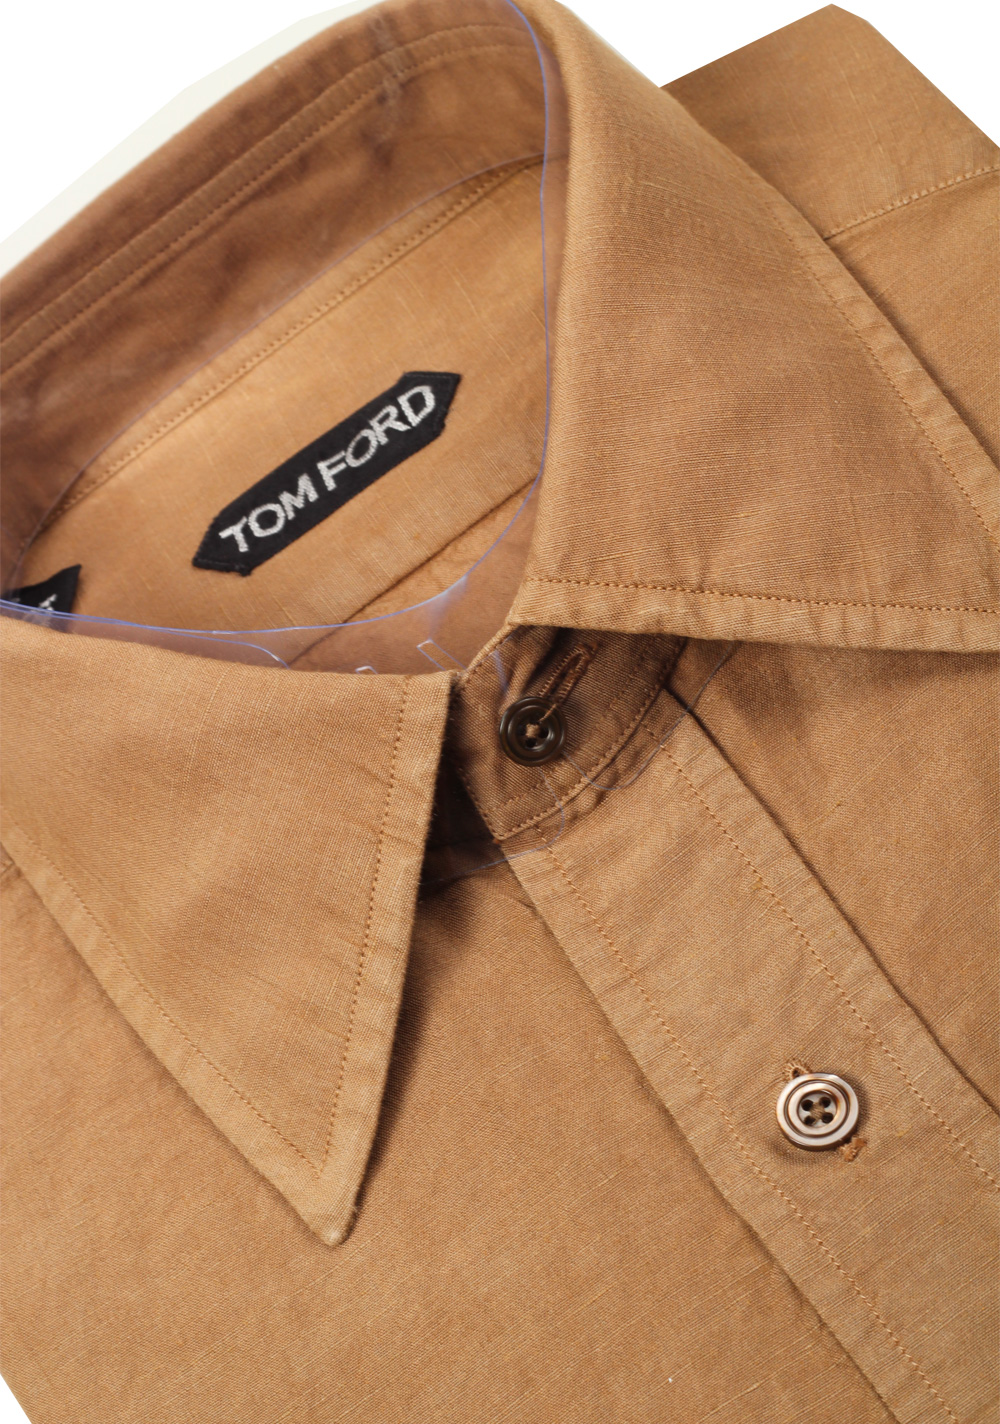 TOM FORD Solid Brown Dress Shirt Size 40 / 15,75 U.S. | Costume Limité